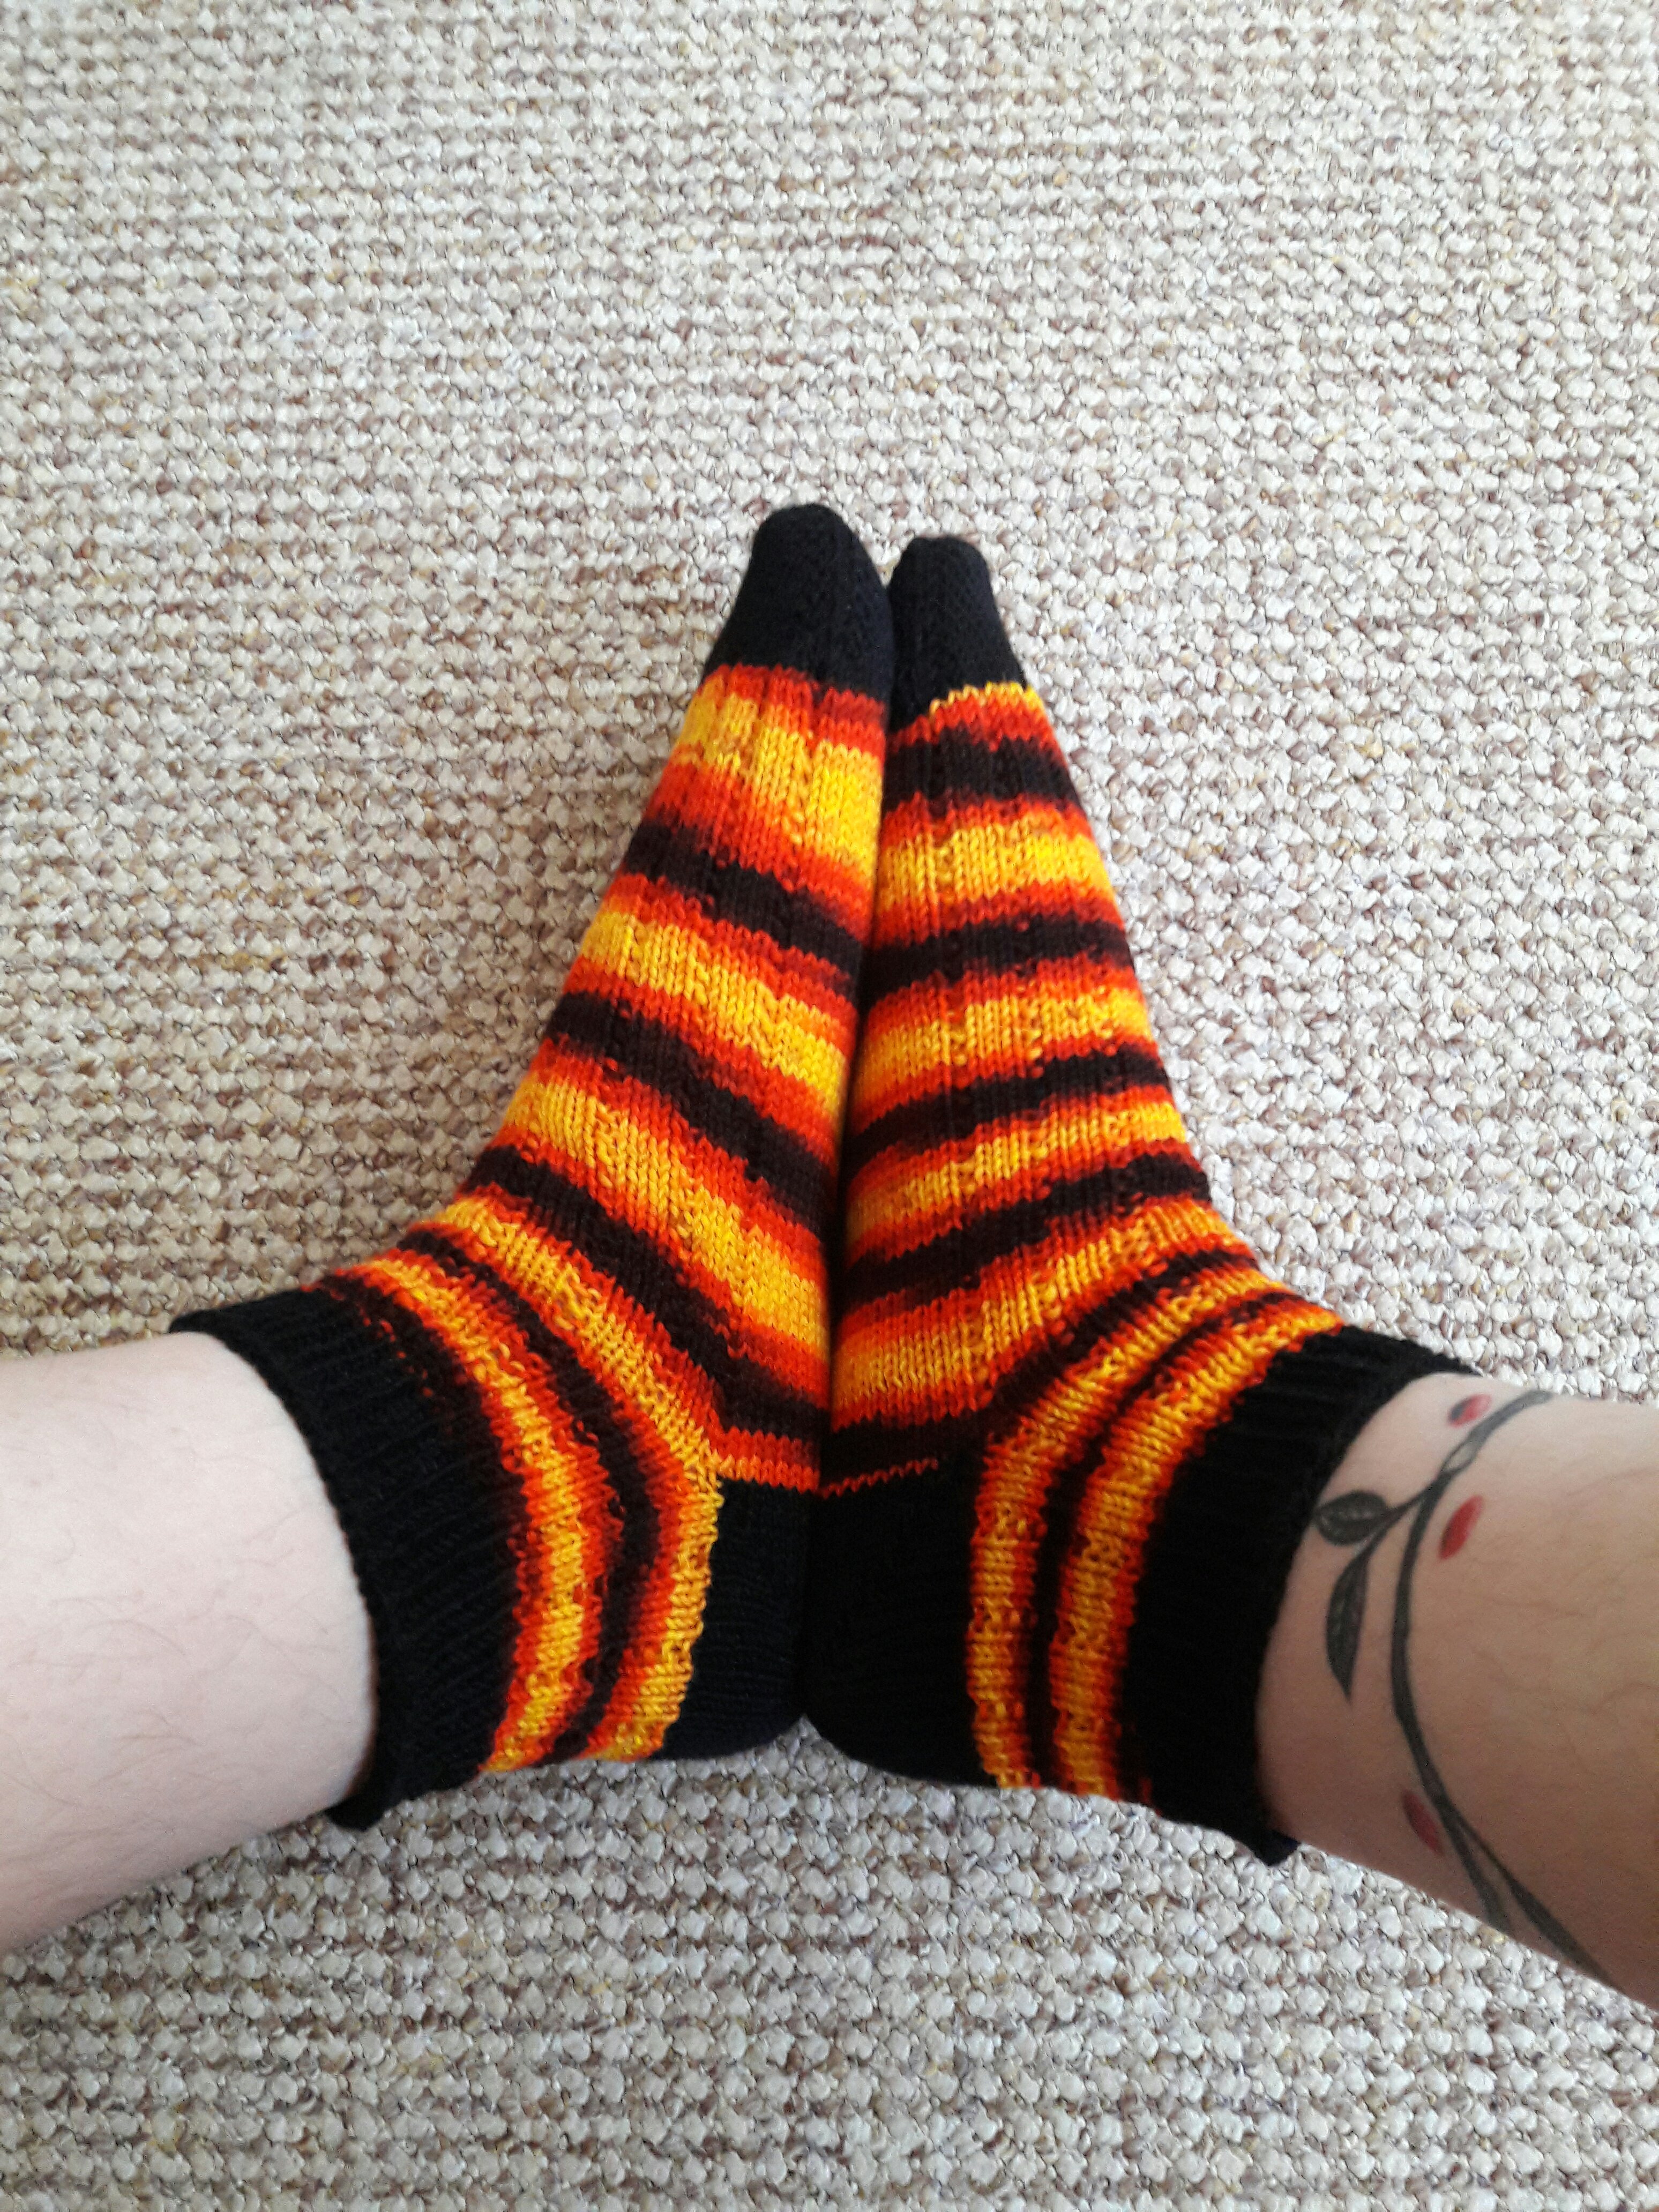 Photo of a pair of orange and black socks